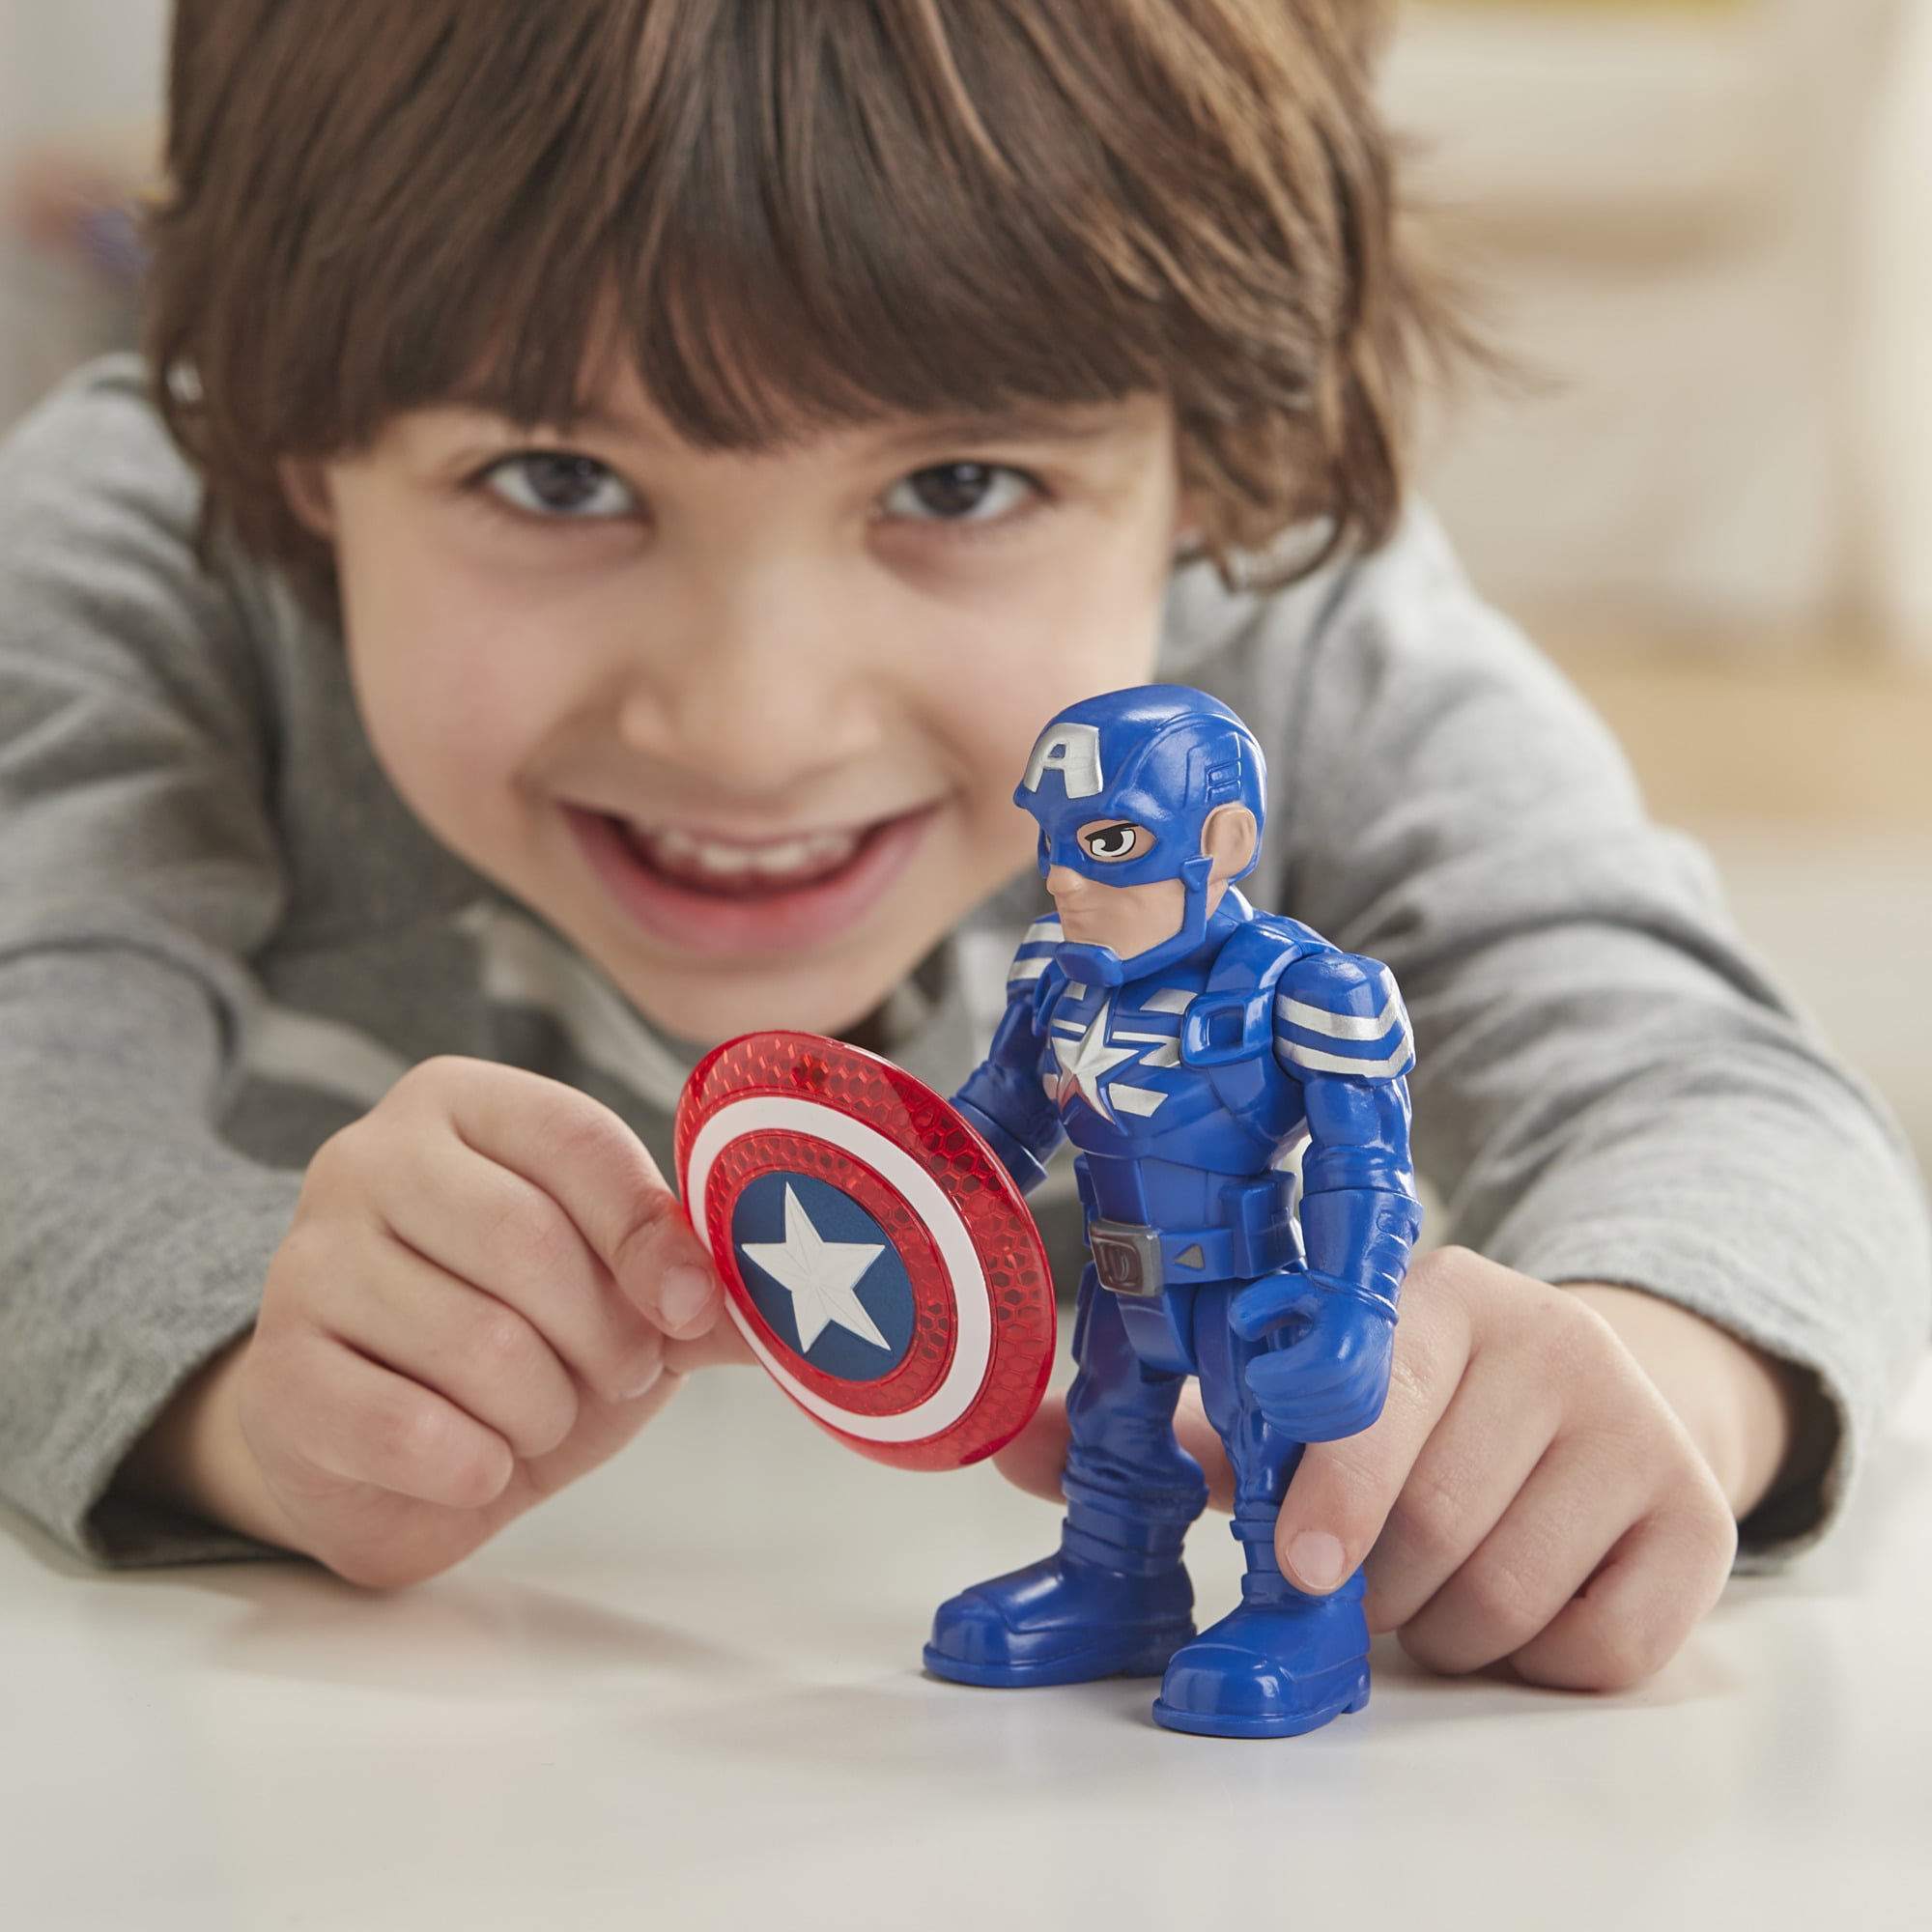 Playskool Heroes Marvel Super Hero Adventures Collectible Captain America  Action Figure 